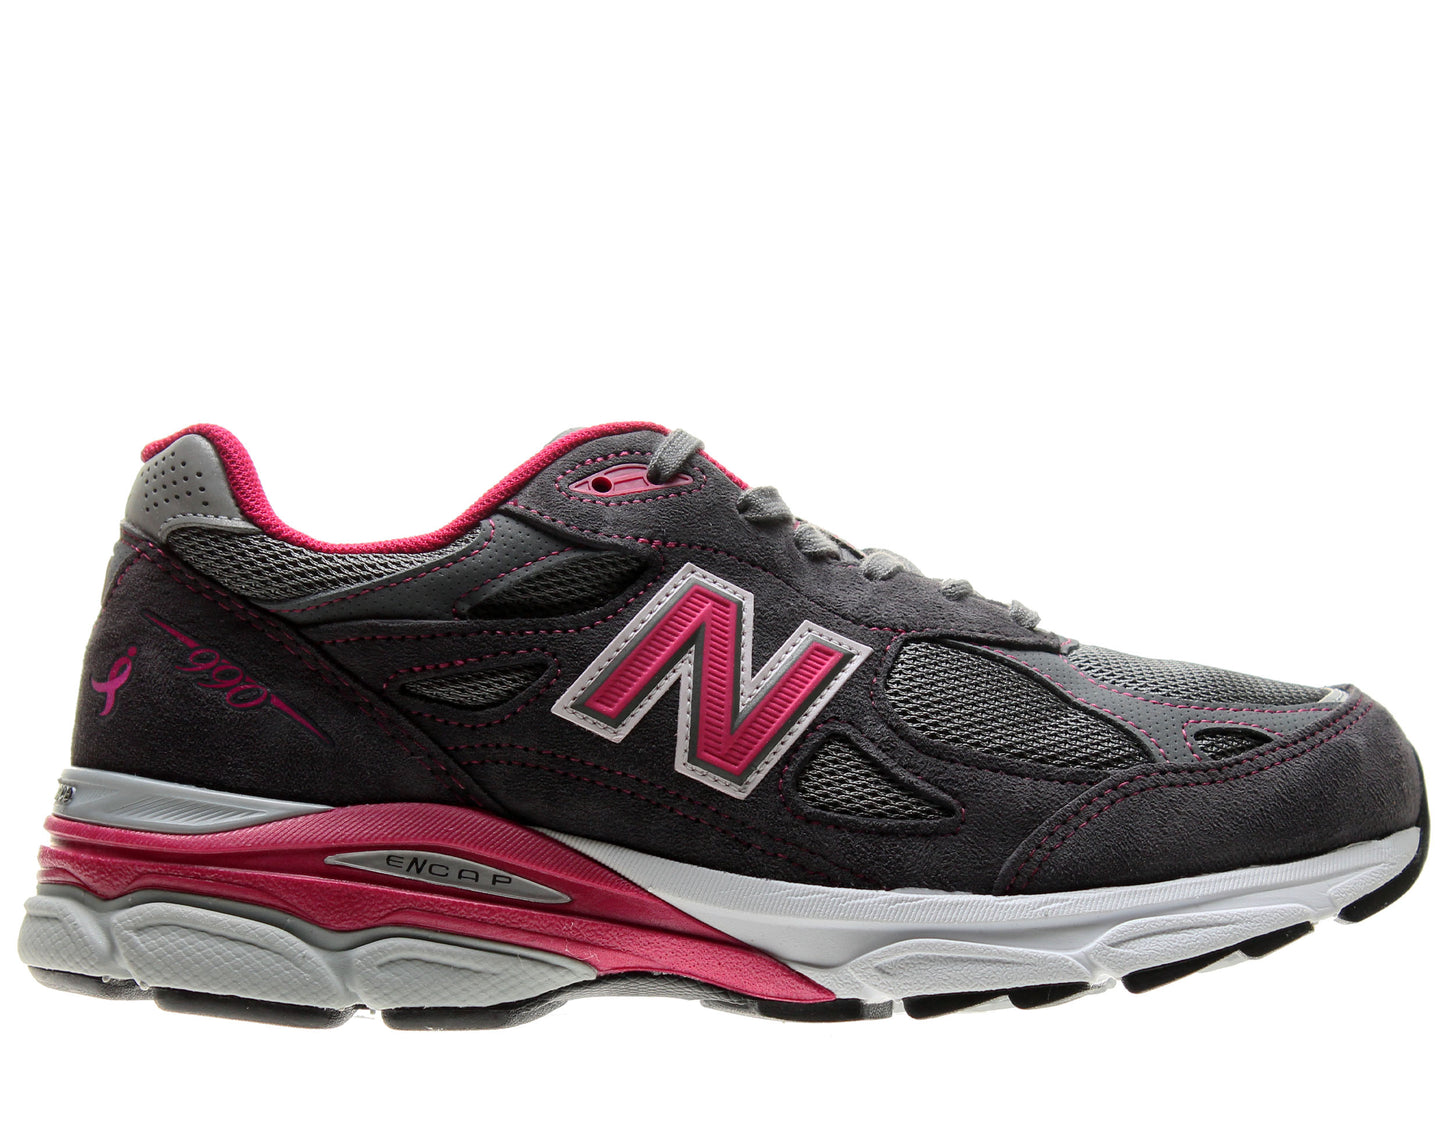 New Balance 990v3 Women's Running Shoes